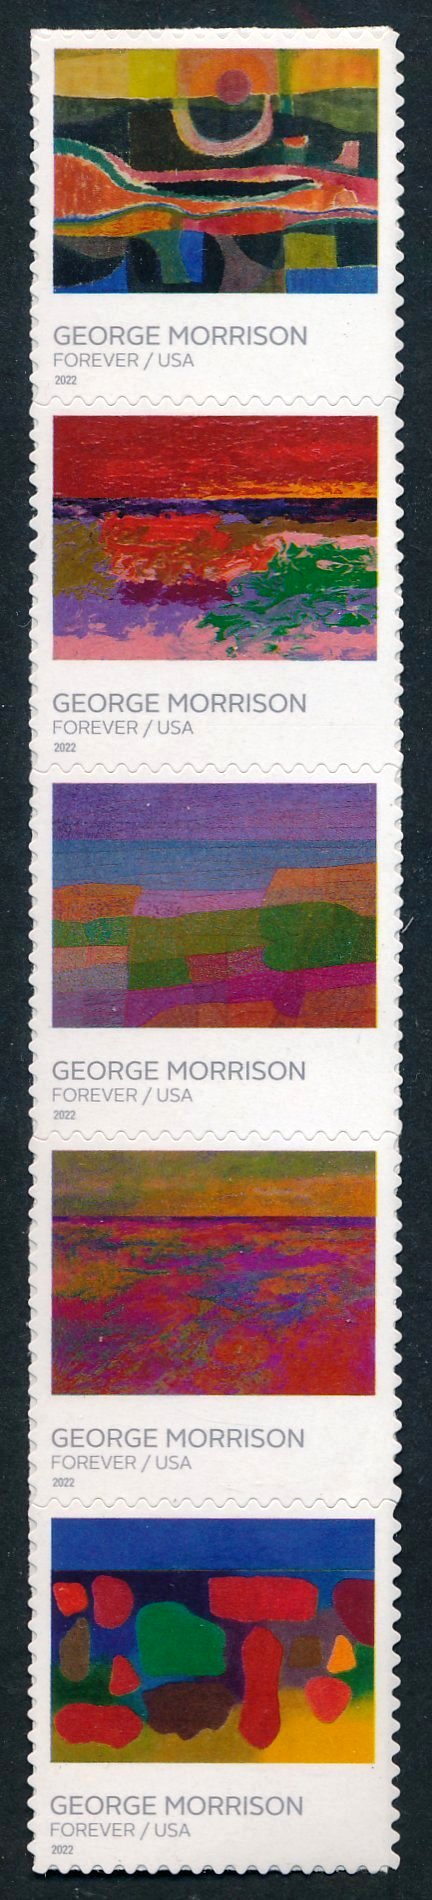 5688-5692stp Forever George Morrison Mint Strip of 5 5688-5692stp